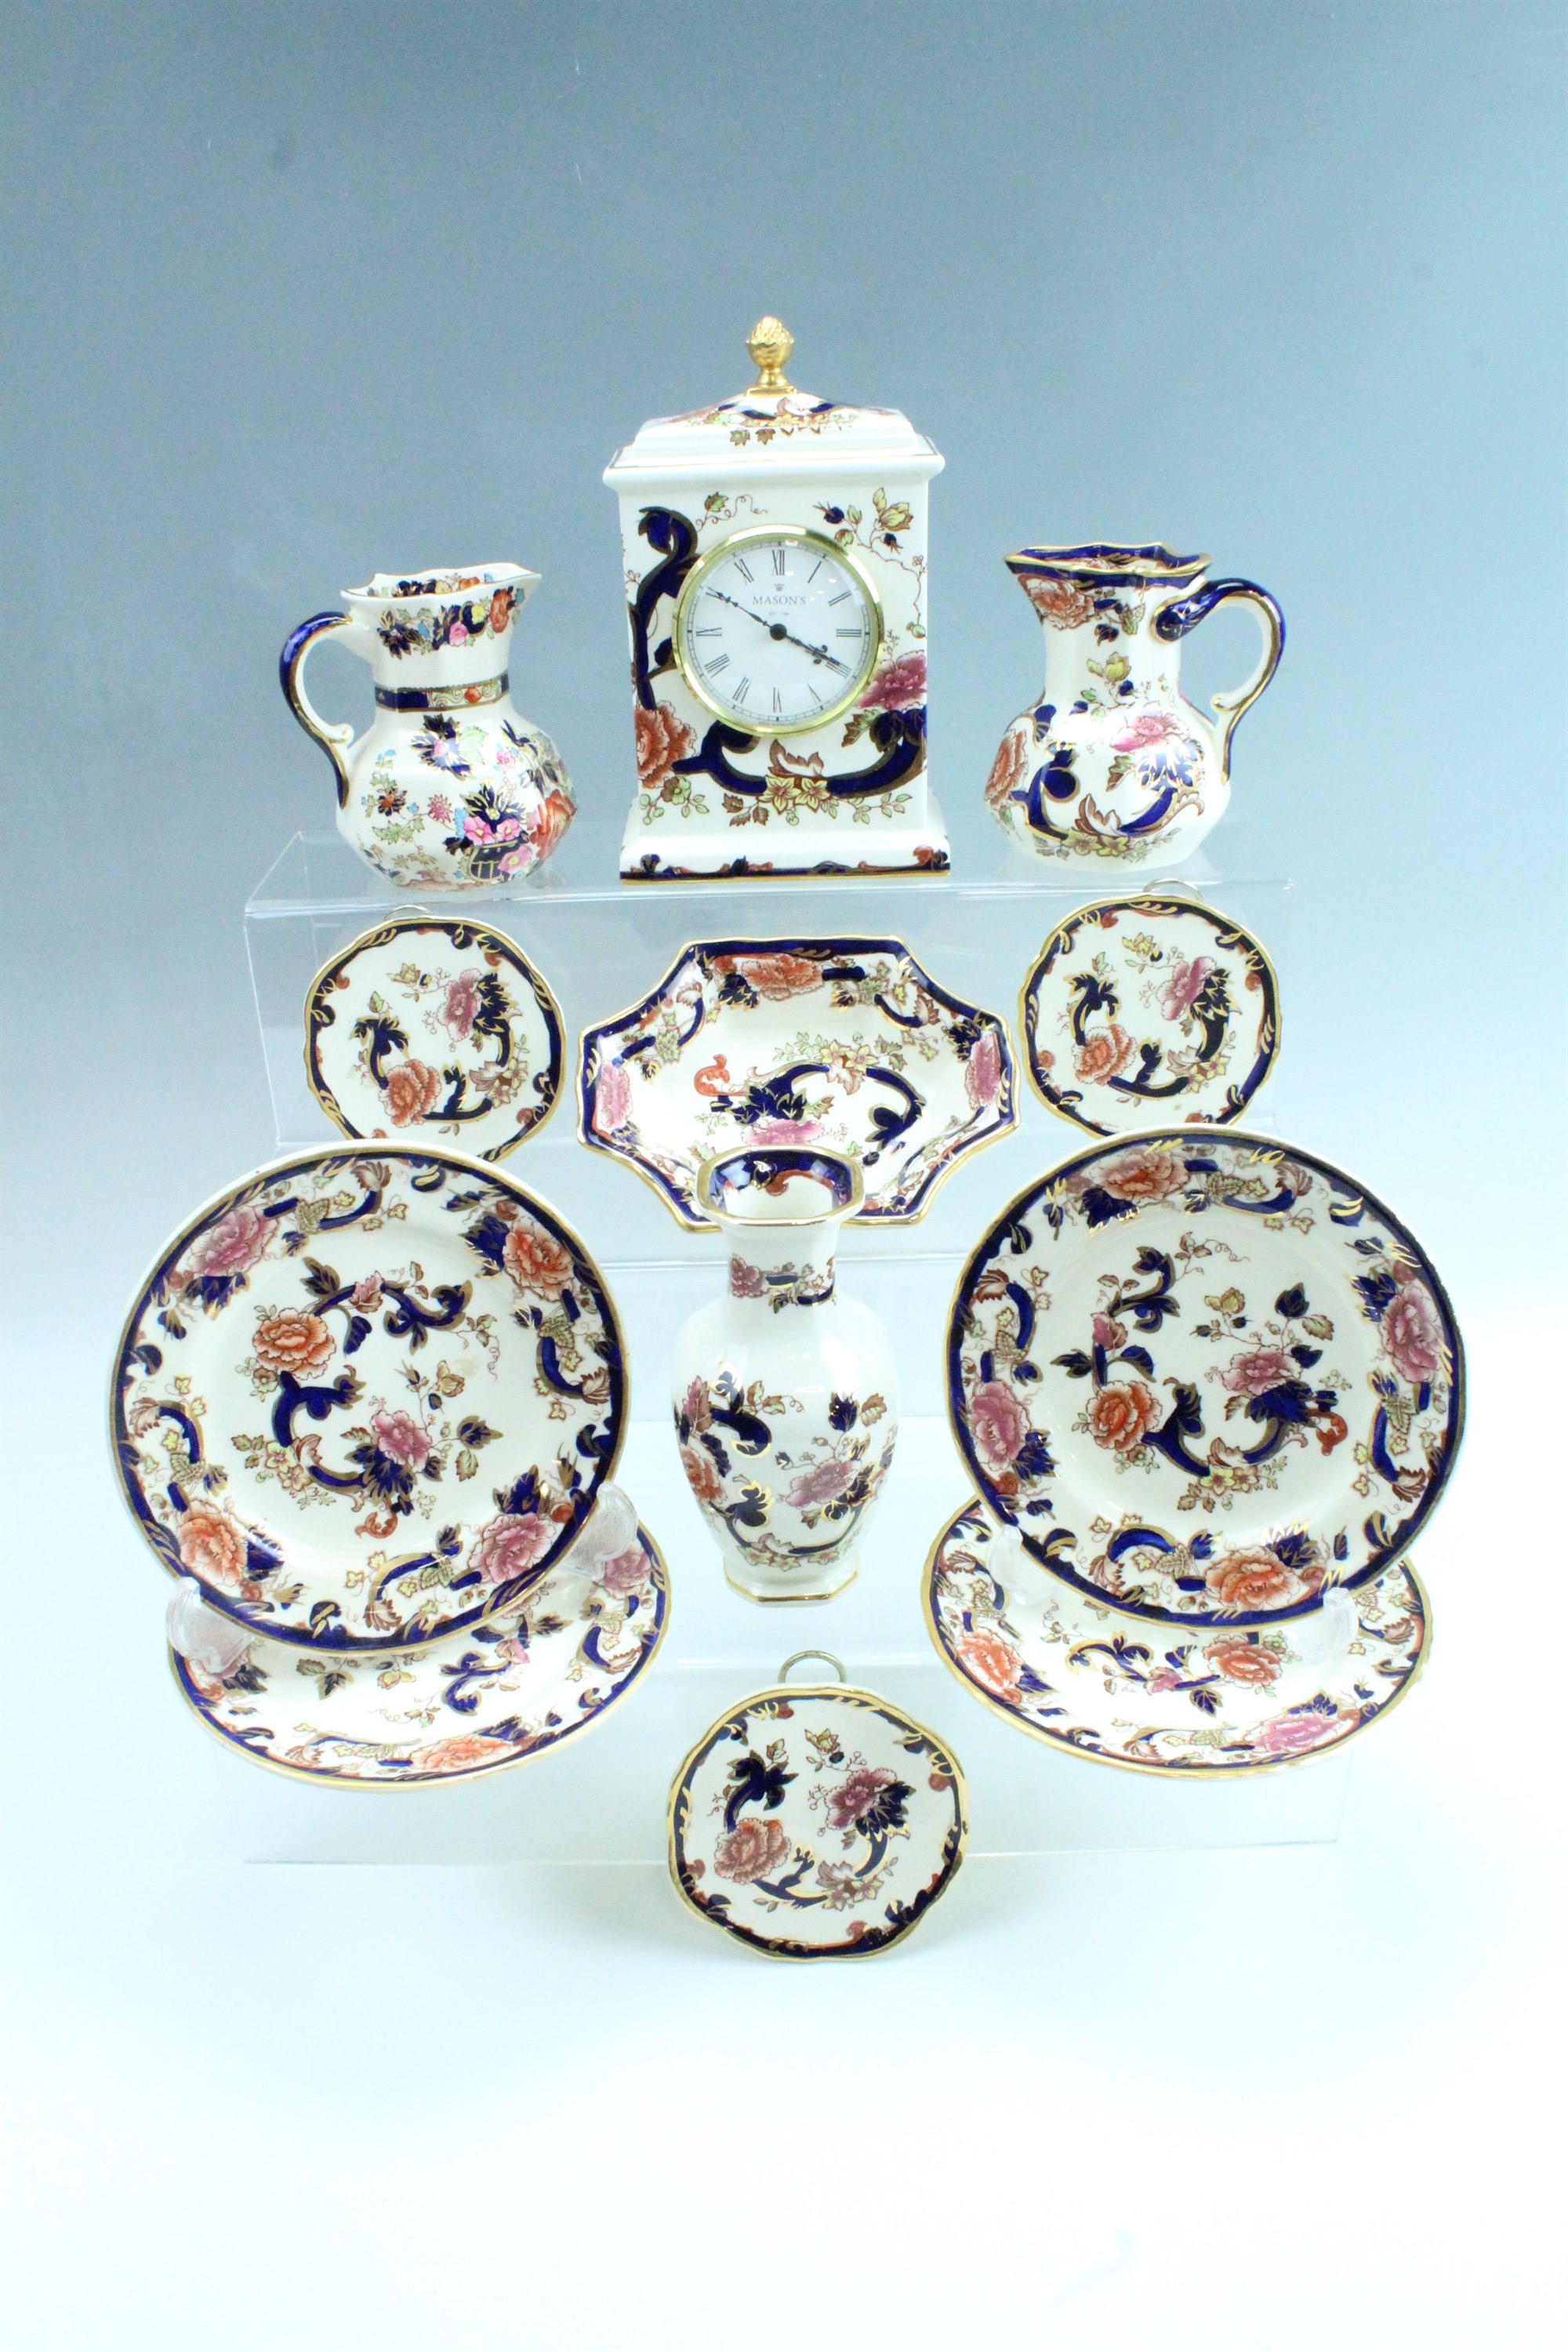 Mason's Blue Mandalay ware including a clock, jug, vase, plates etc, together with Mason's